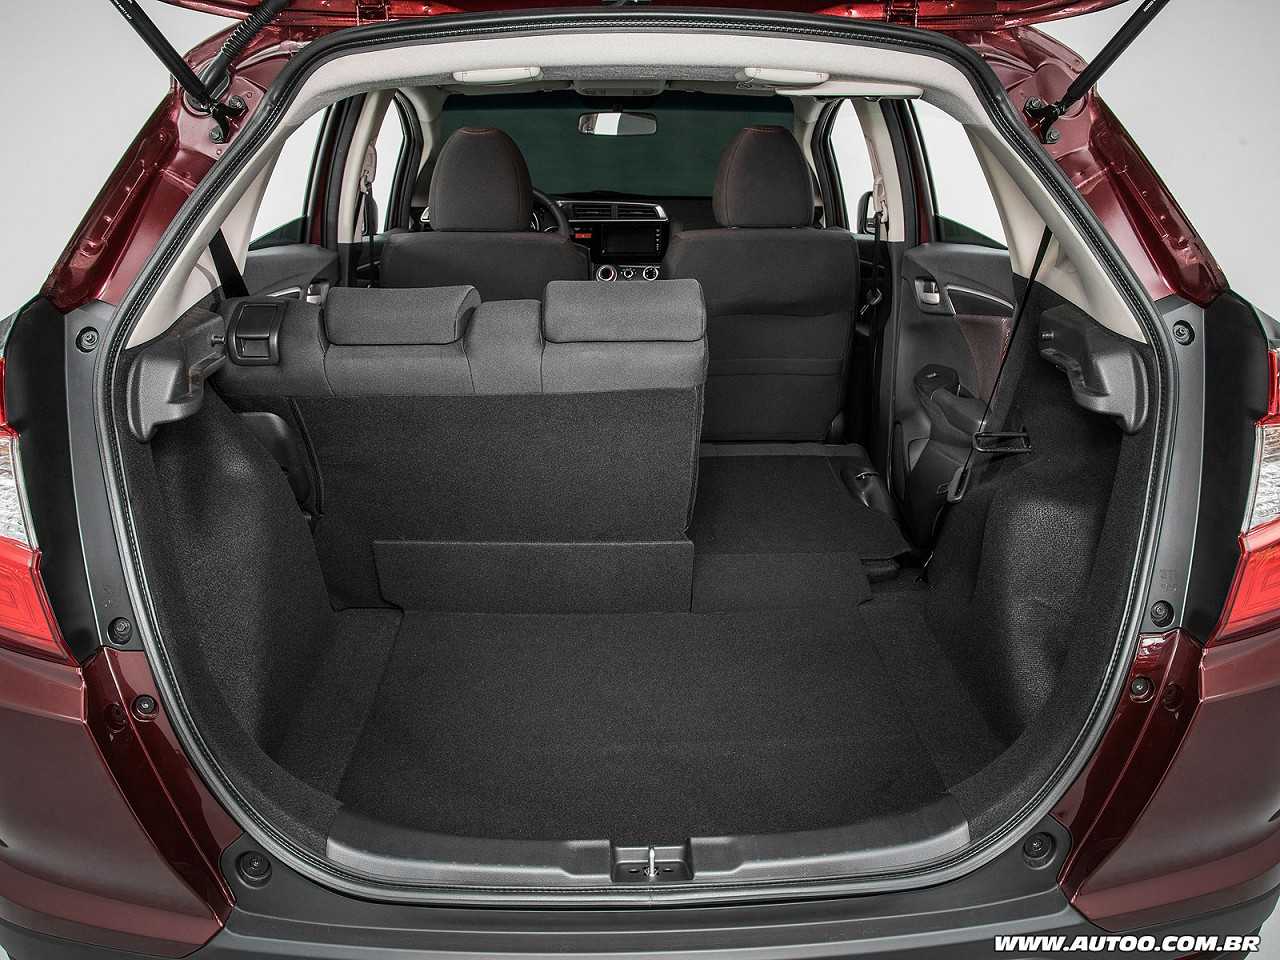 HondaWR-V 2017 - porta-malas